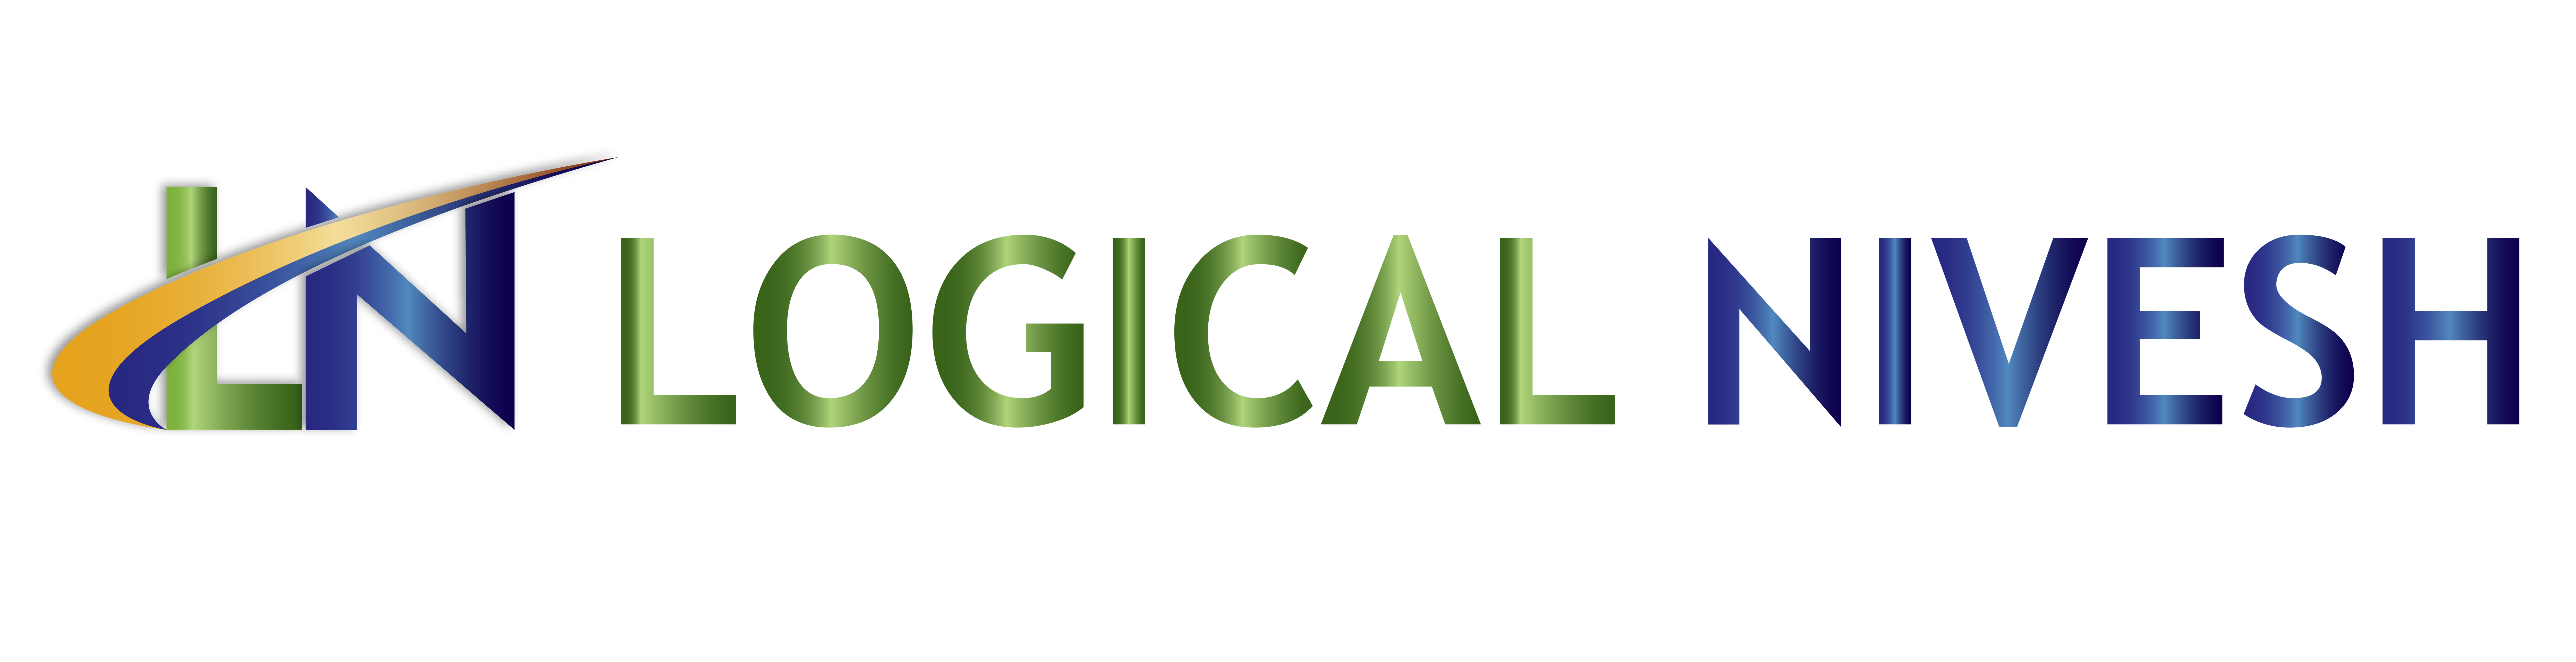 LOGICAL NIVESH logo